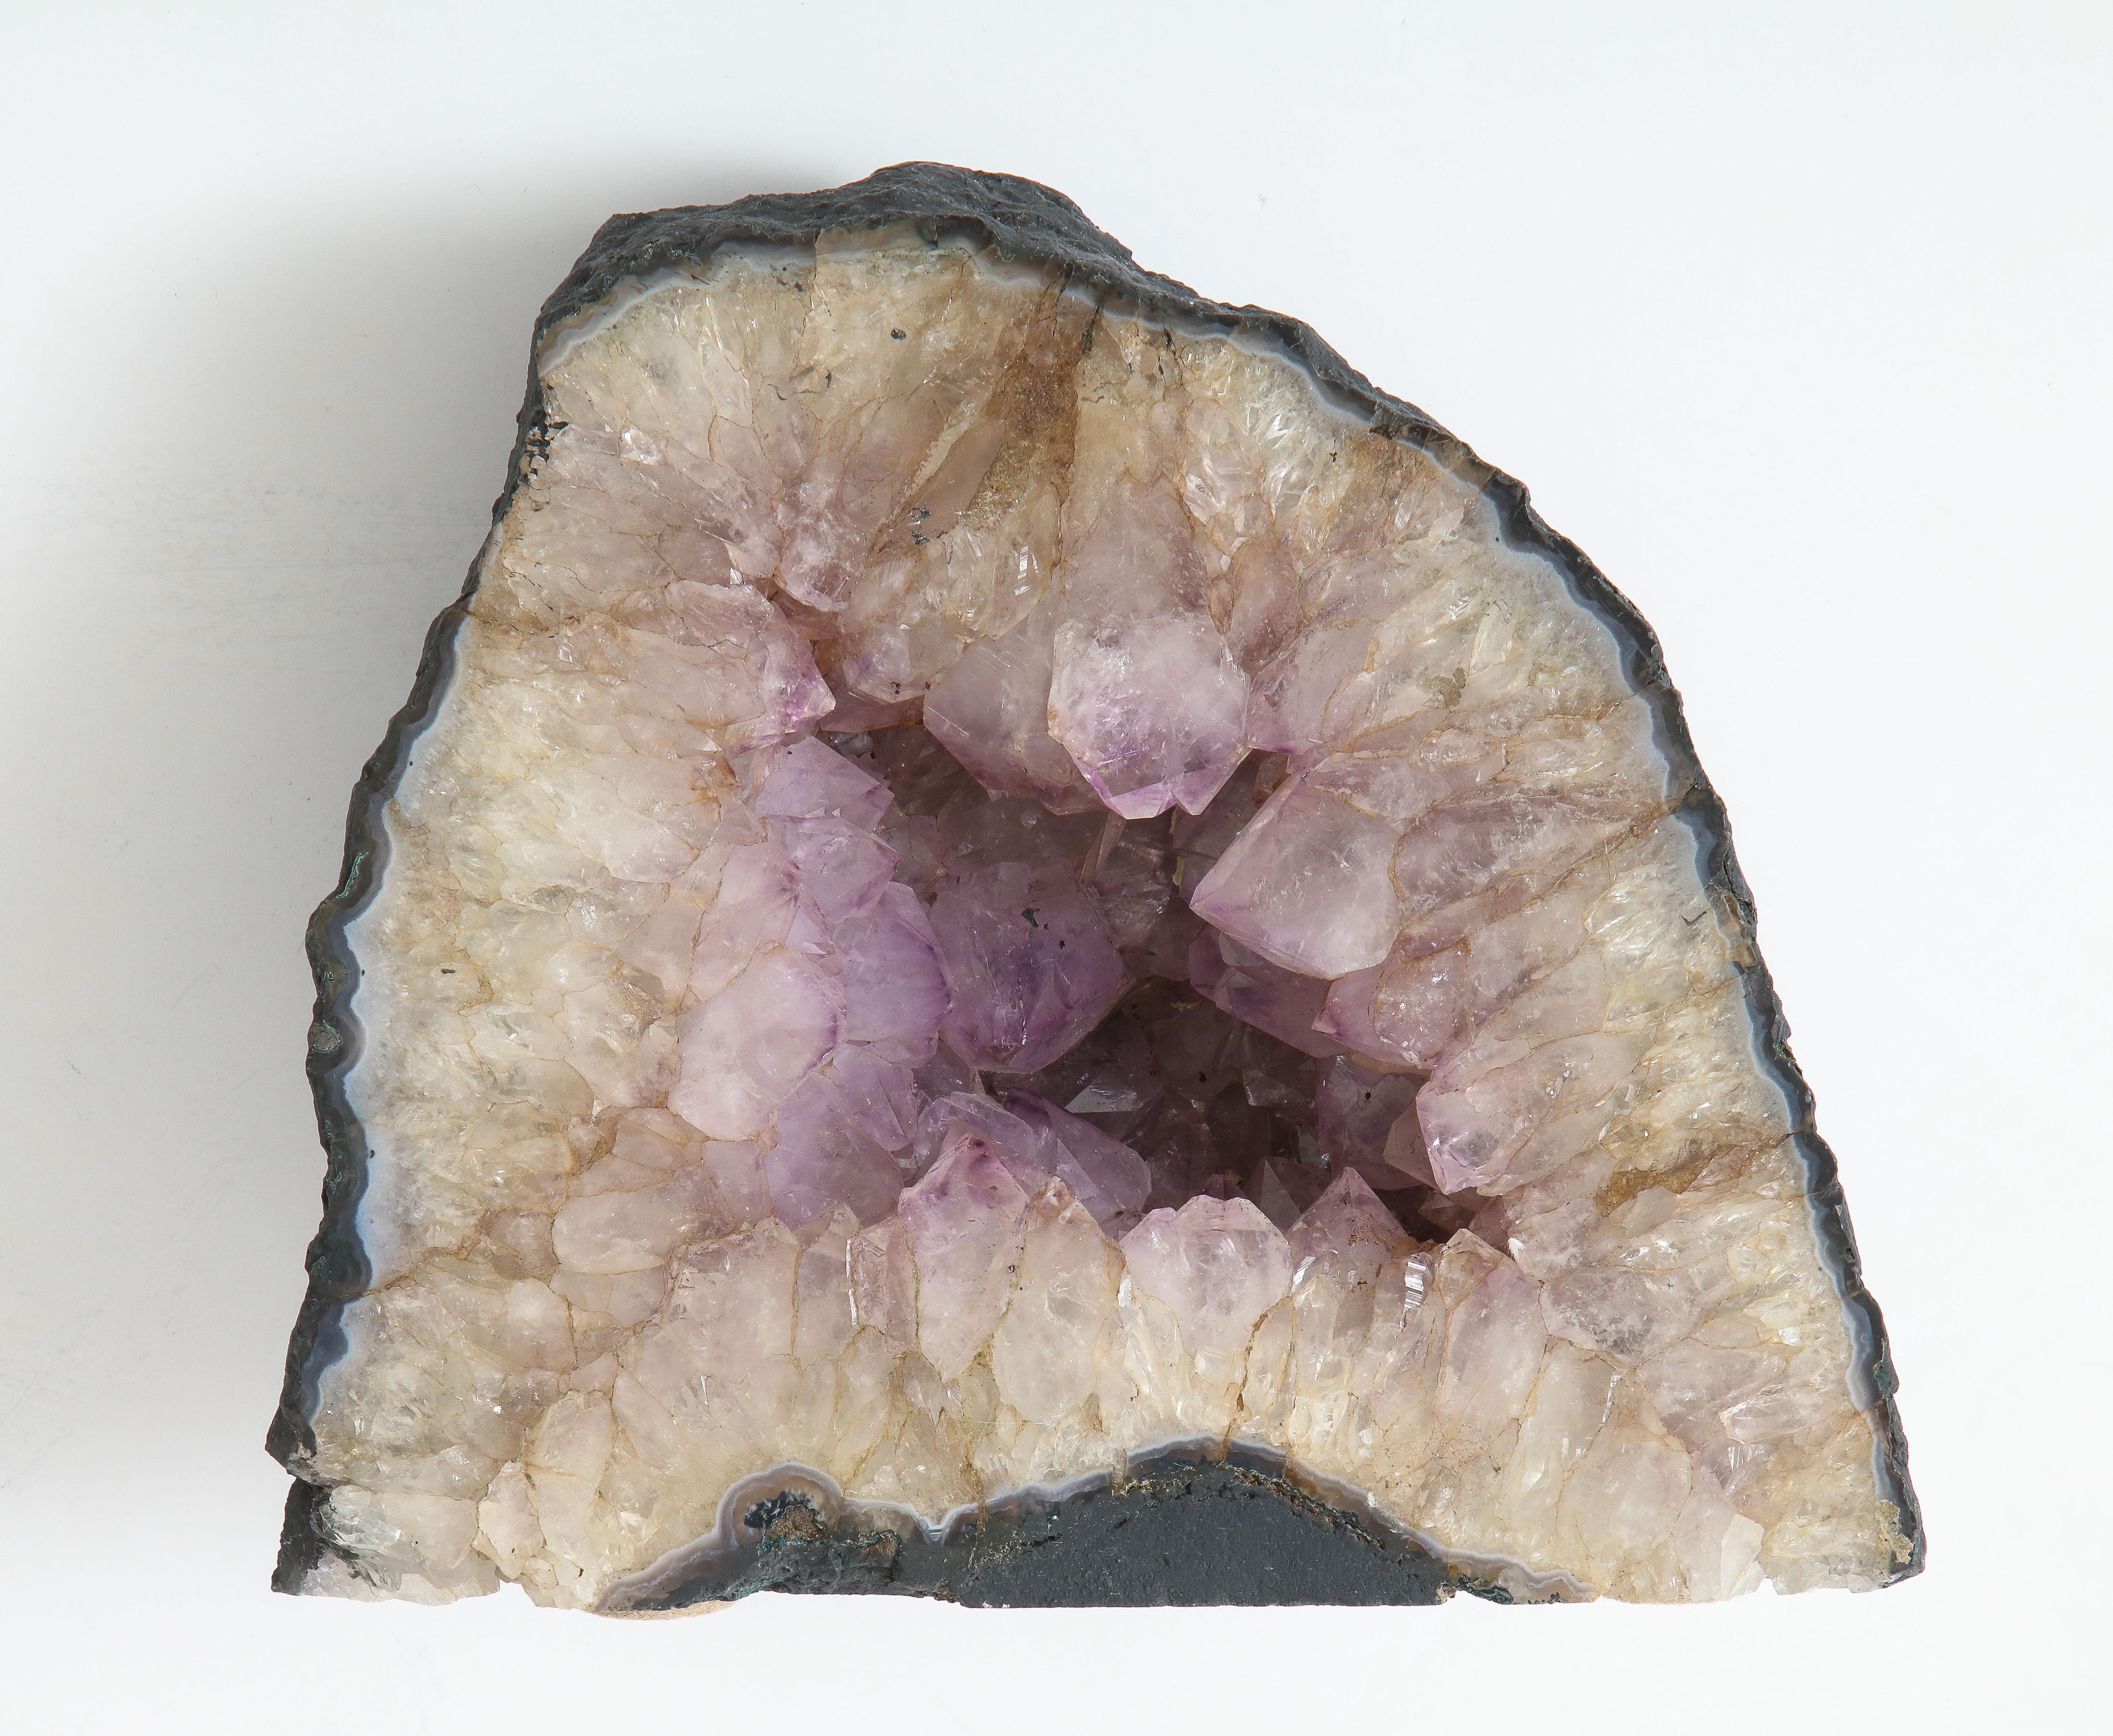 Superb quartz trranslucent crystal specimen with an Amethyst center.